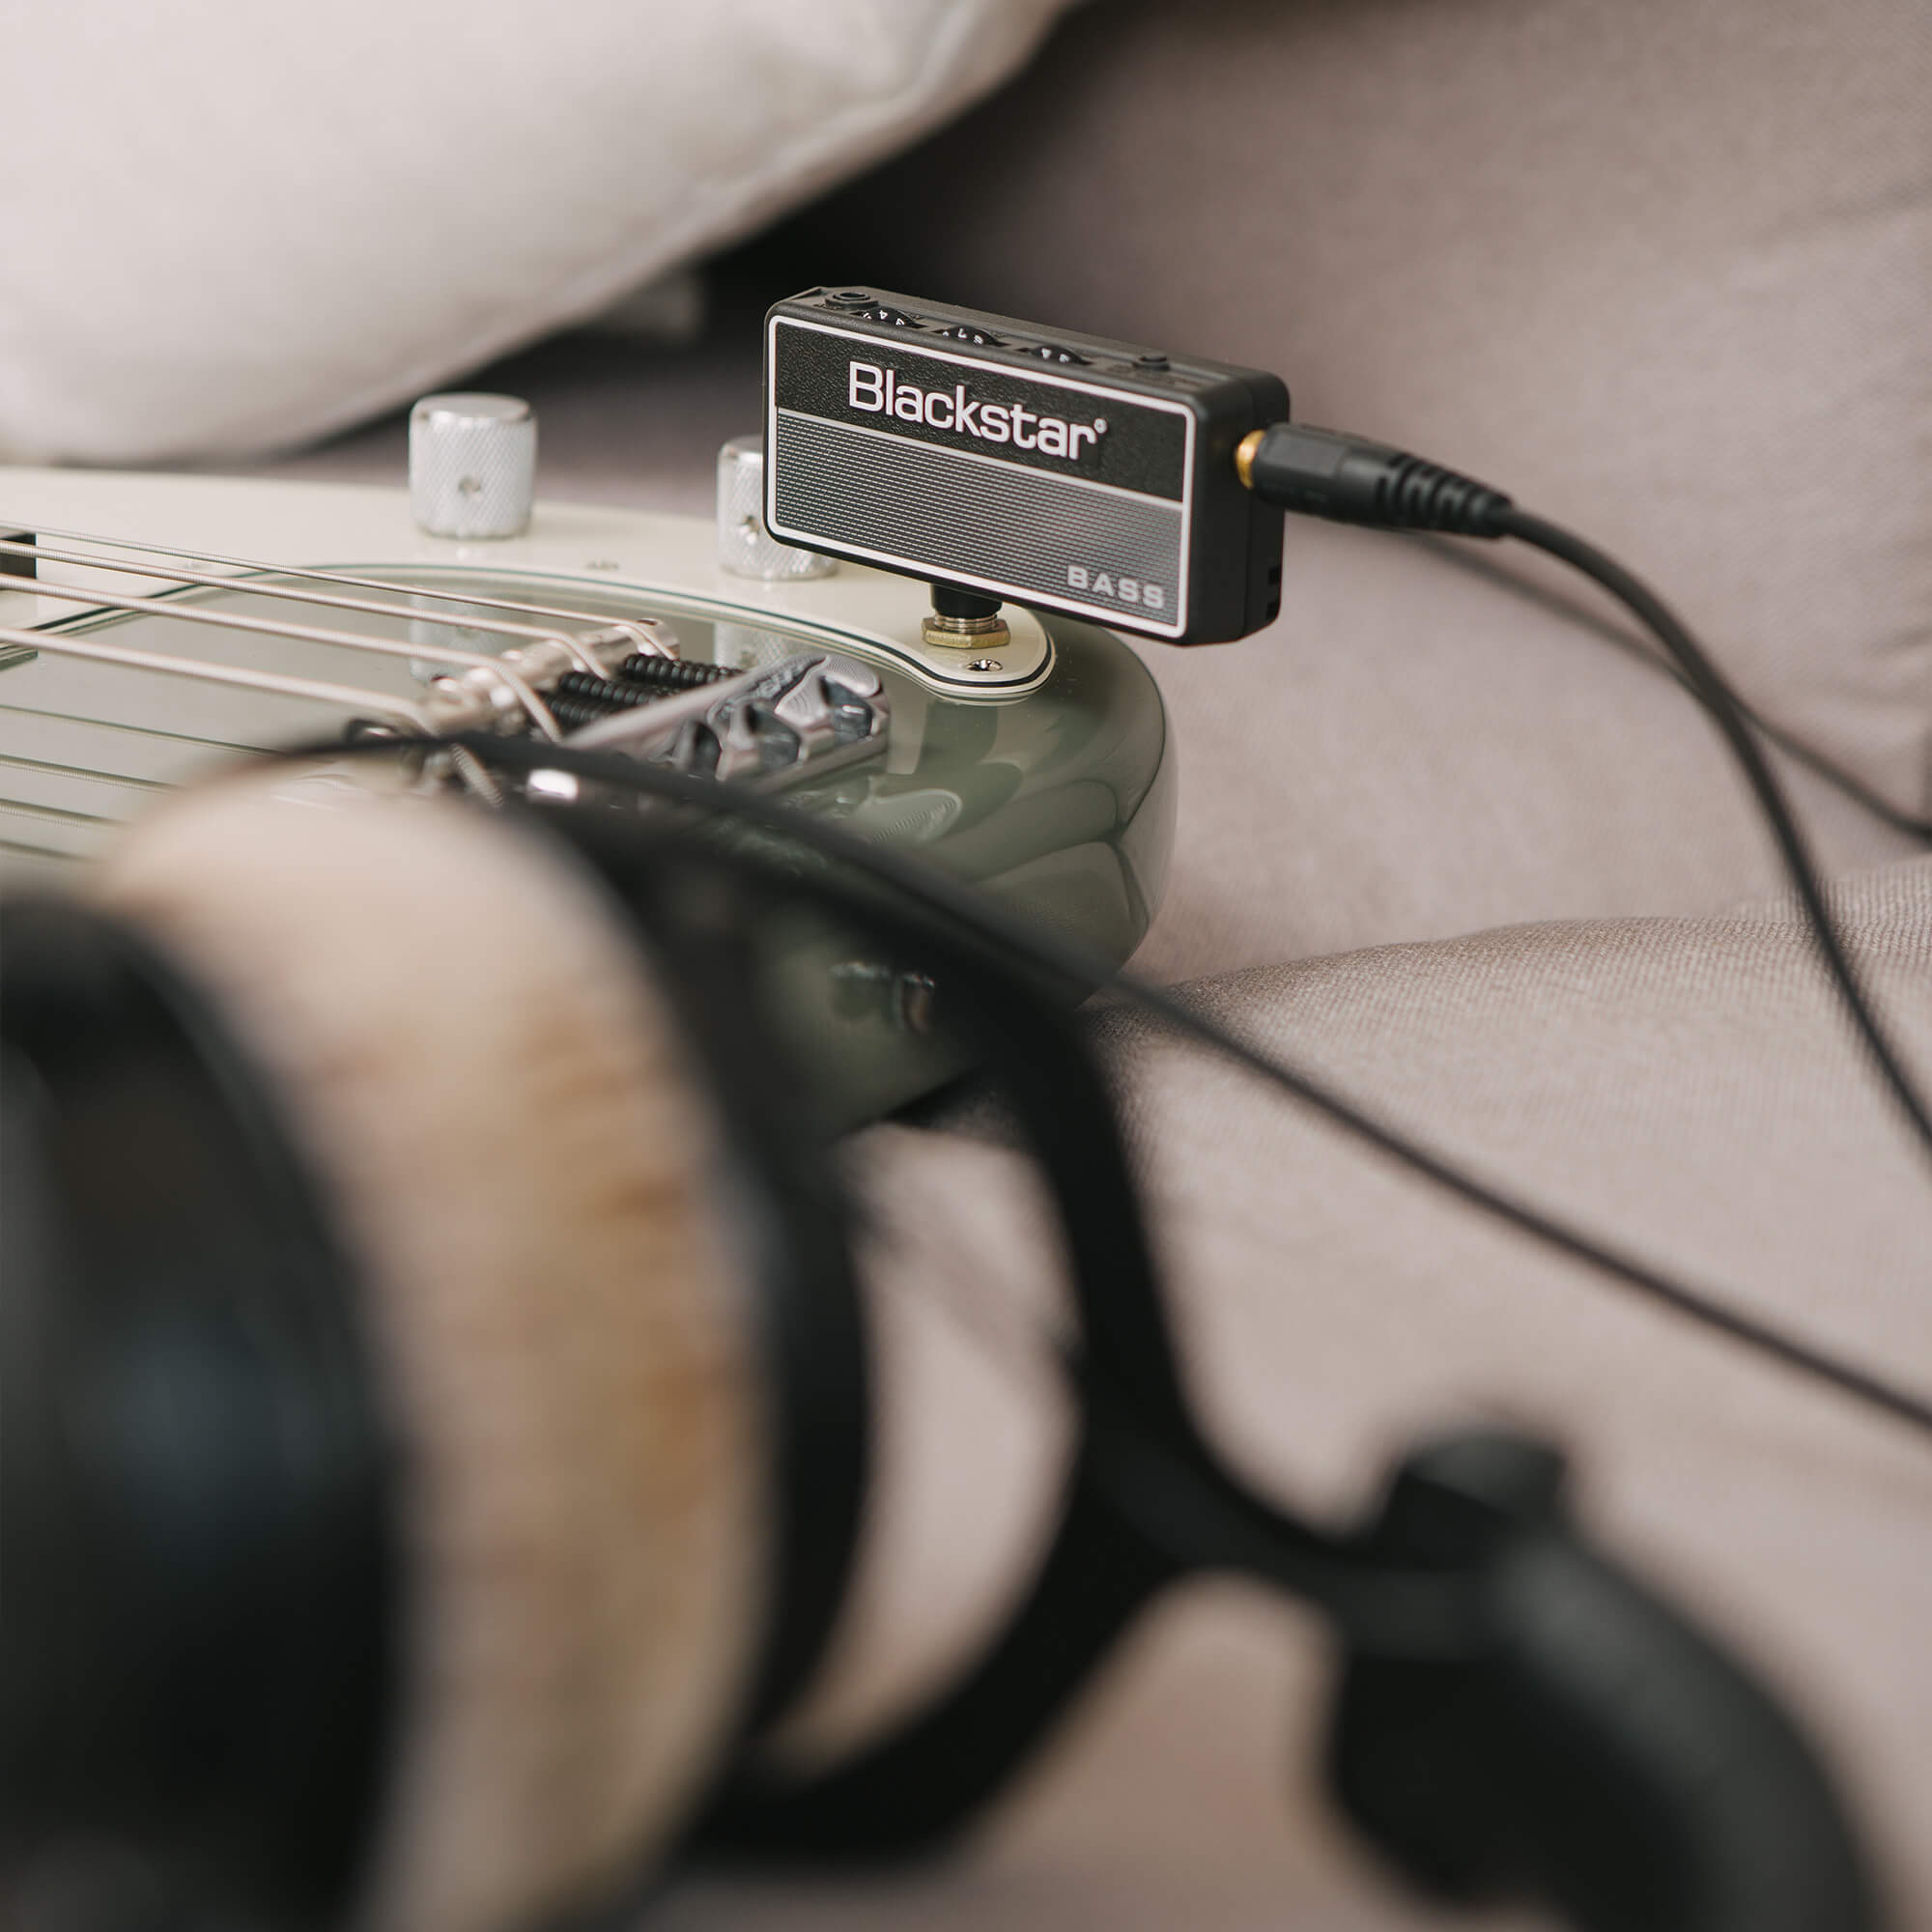 Blackstar amplug 2 FLY Bass amp plugged into electric bass and headphones